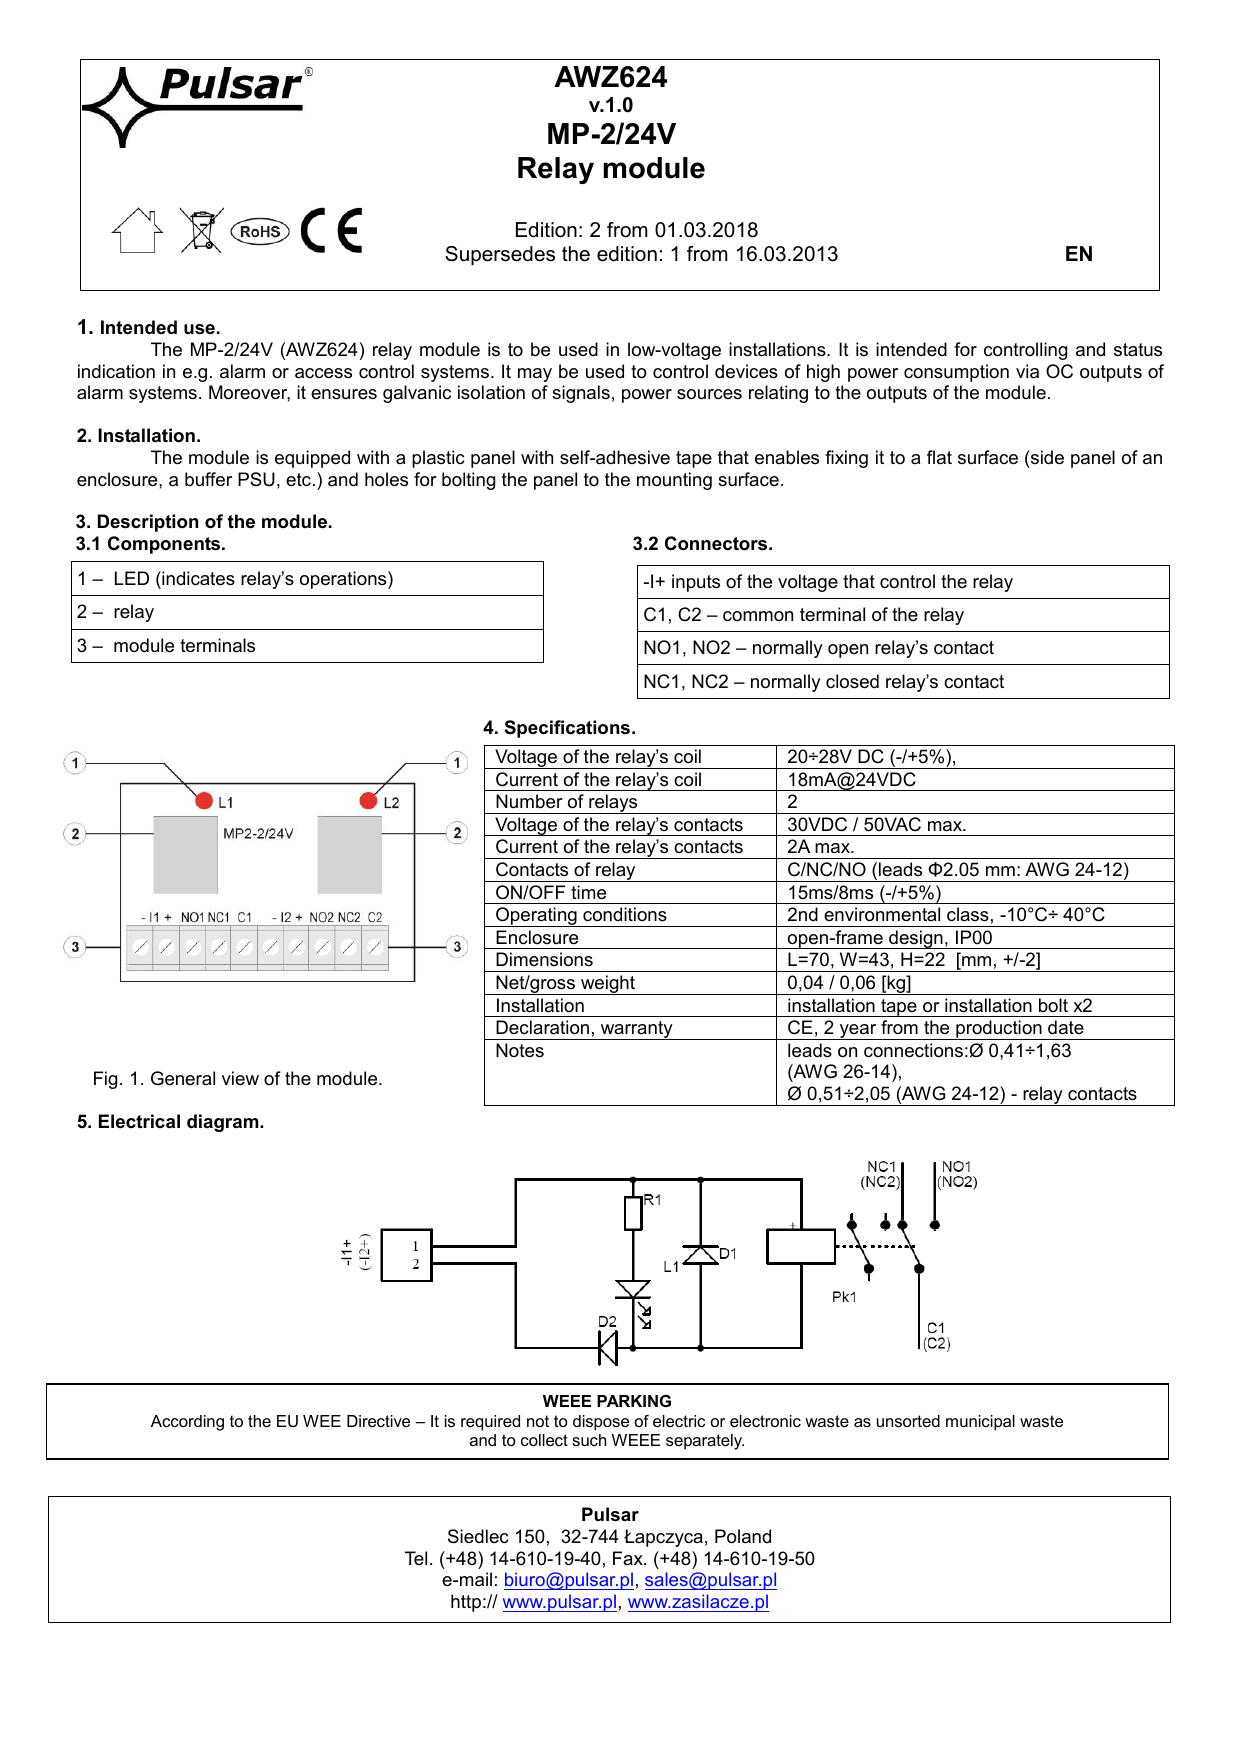 Pulsar Awz624 Operating Instructions Manualzz